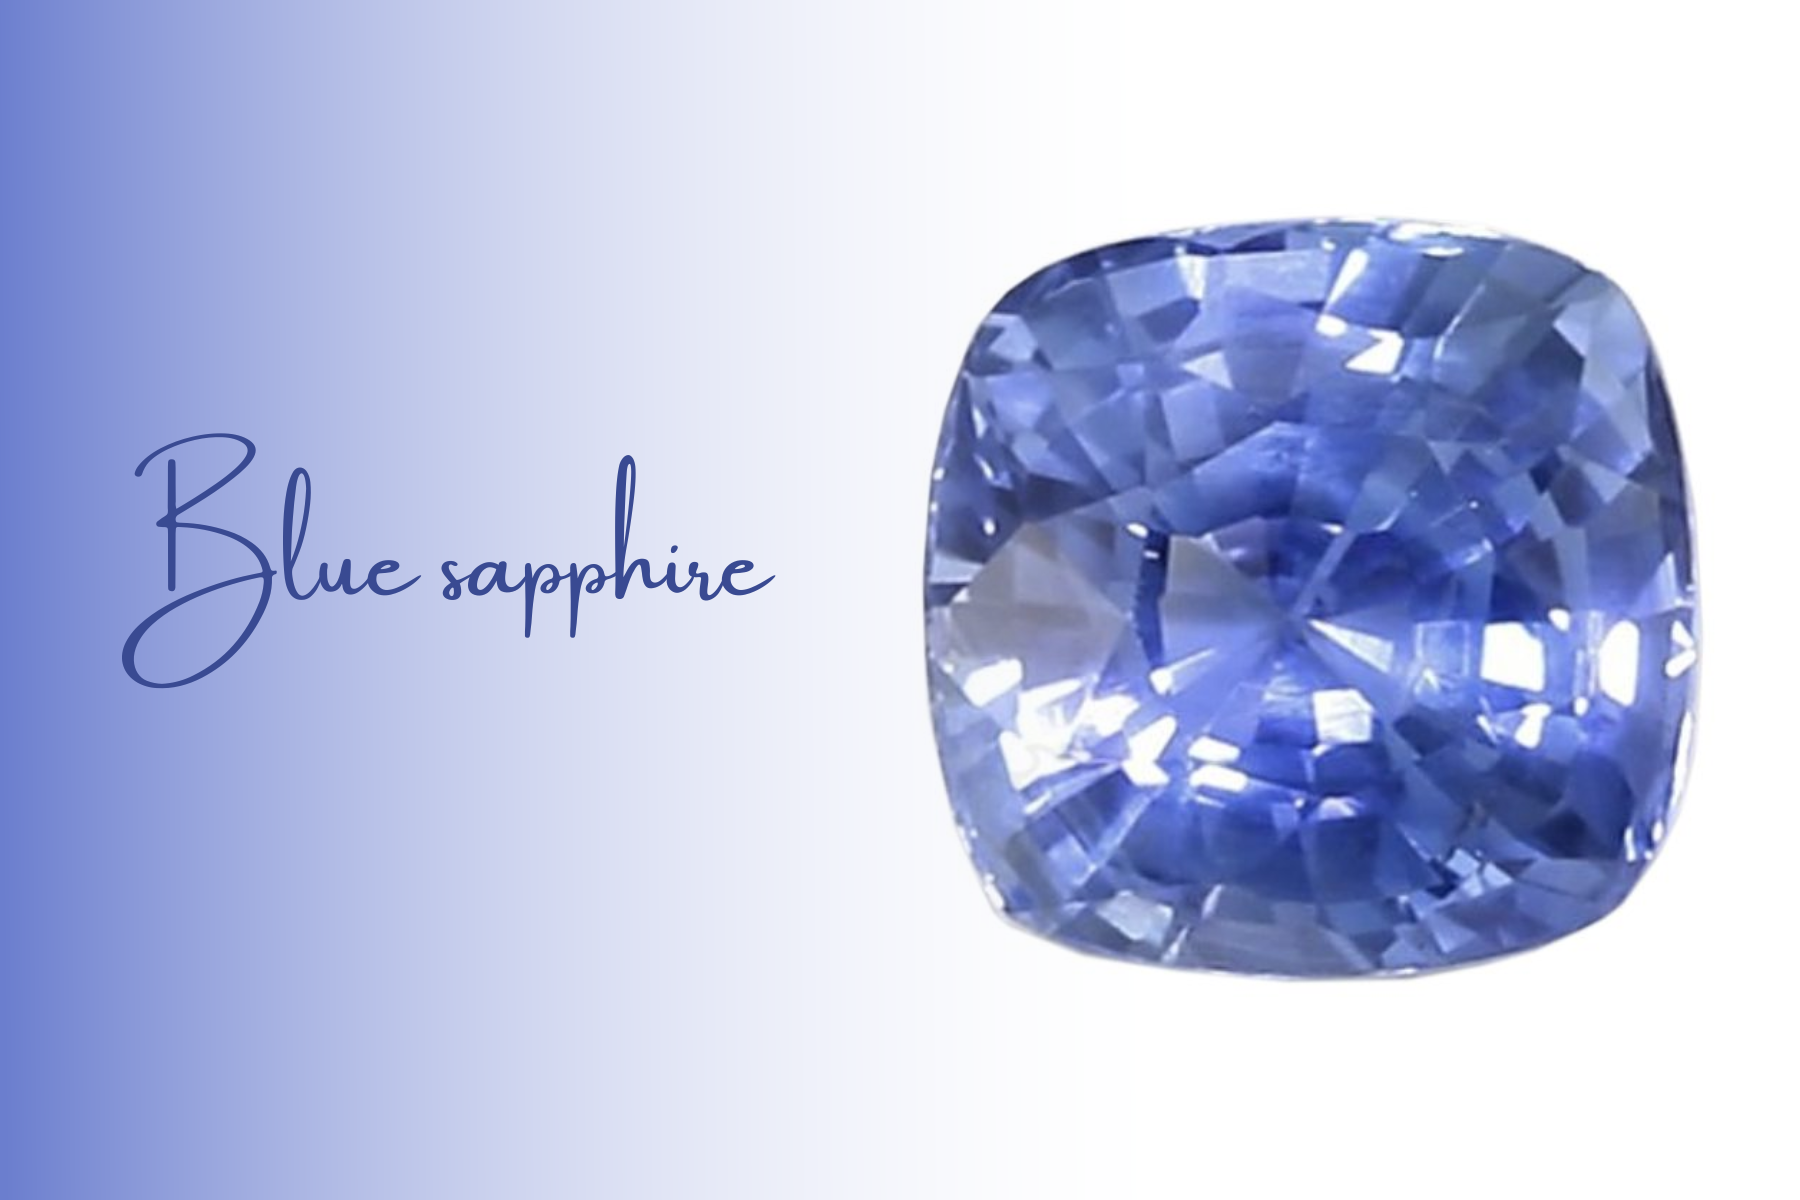 A smooth-cornered square blue sapphire